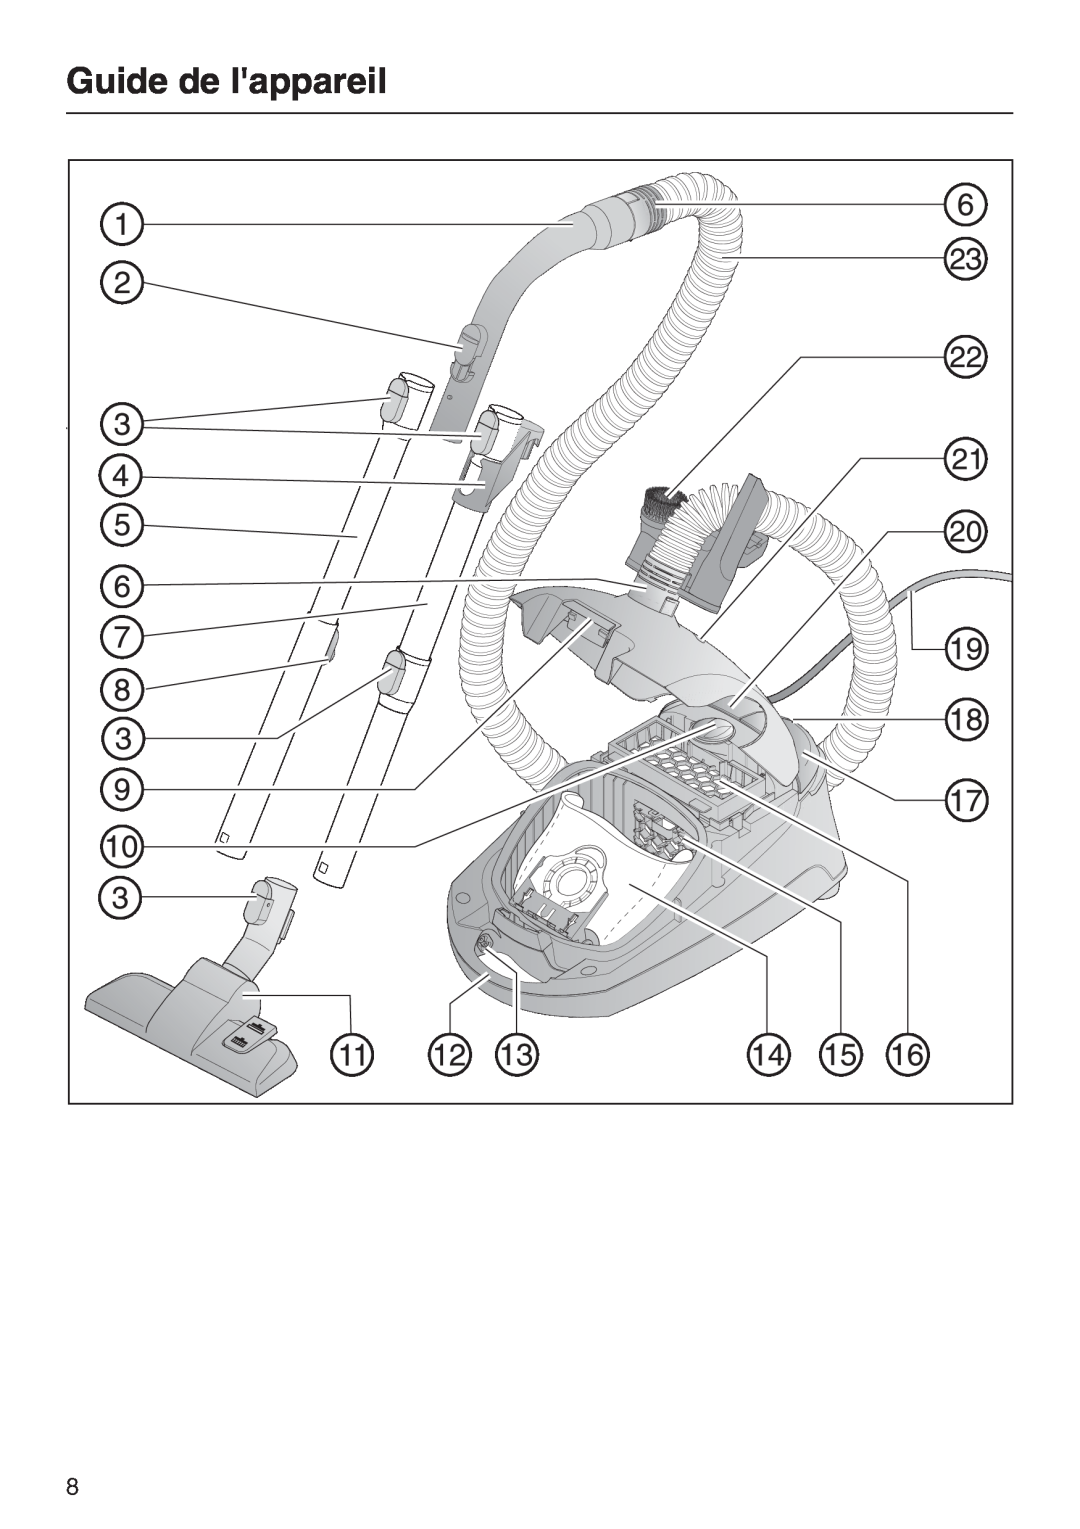 Miele S 2000 operating instructions Guide de lappareil 